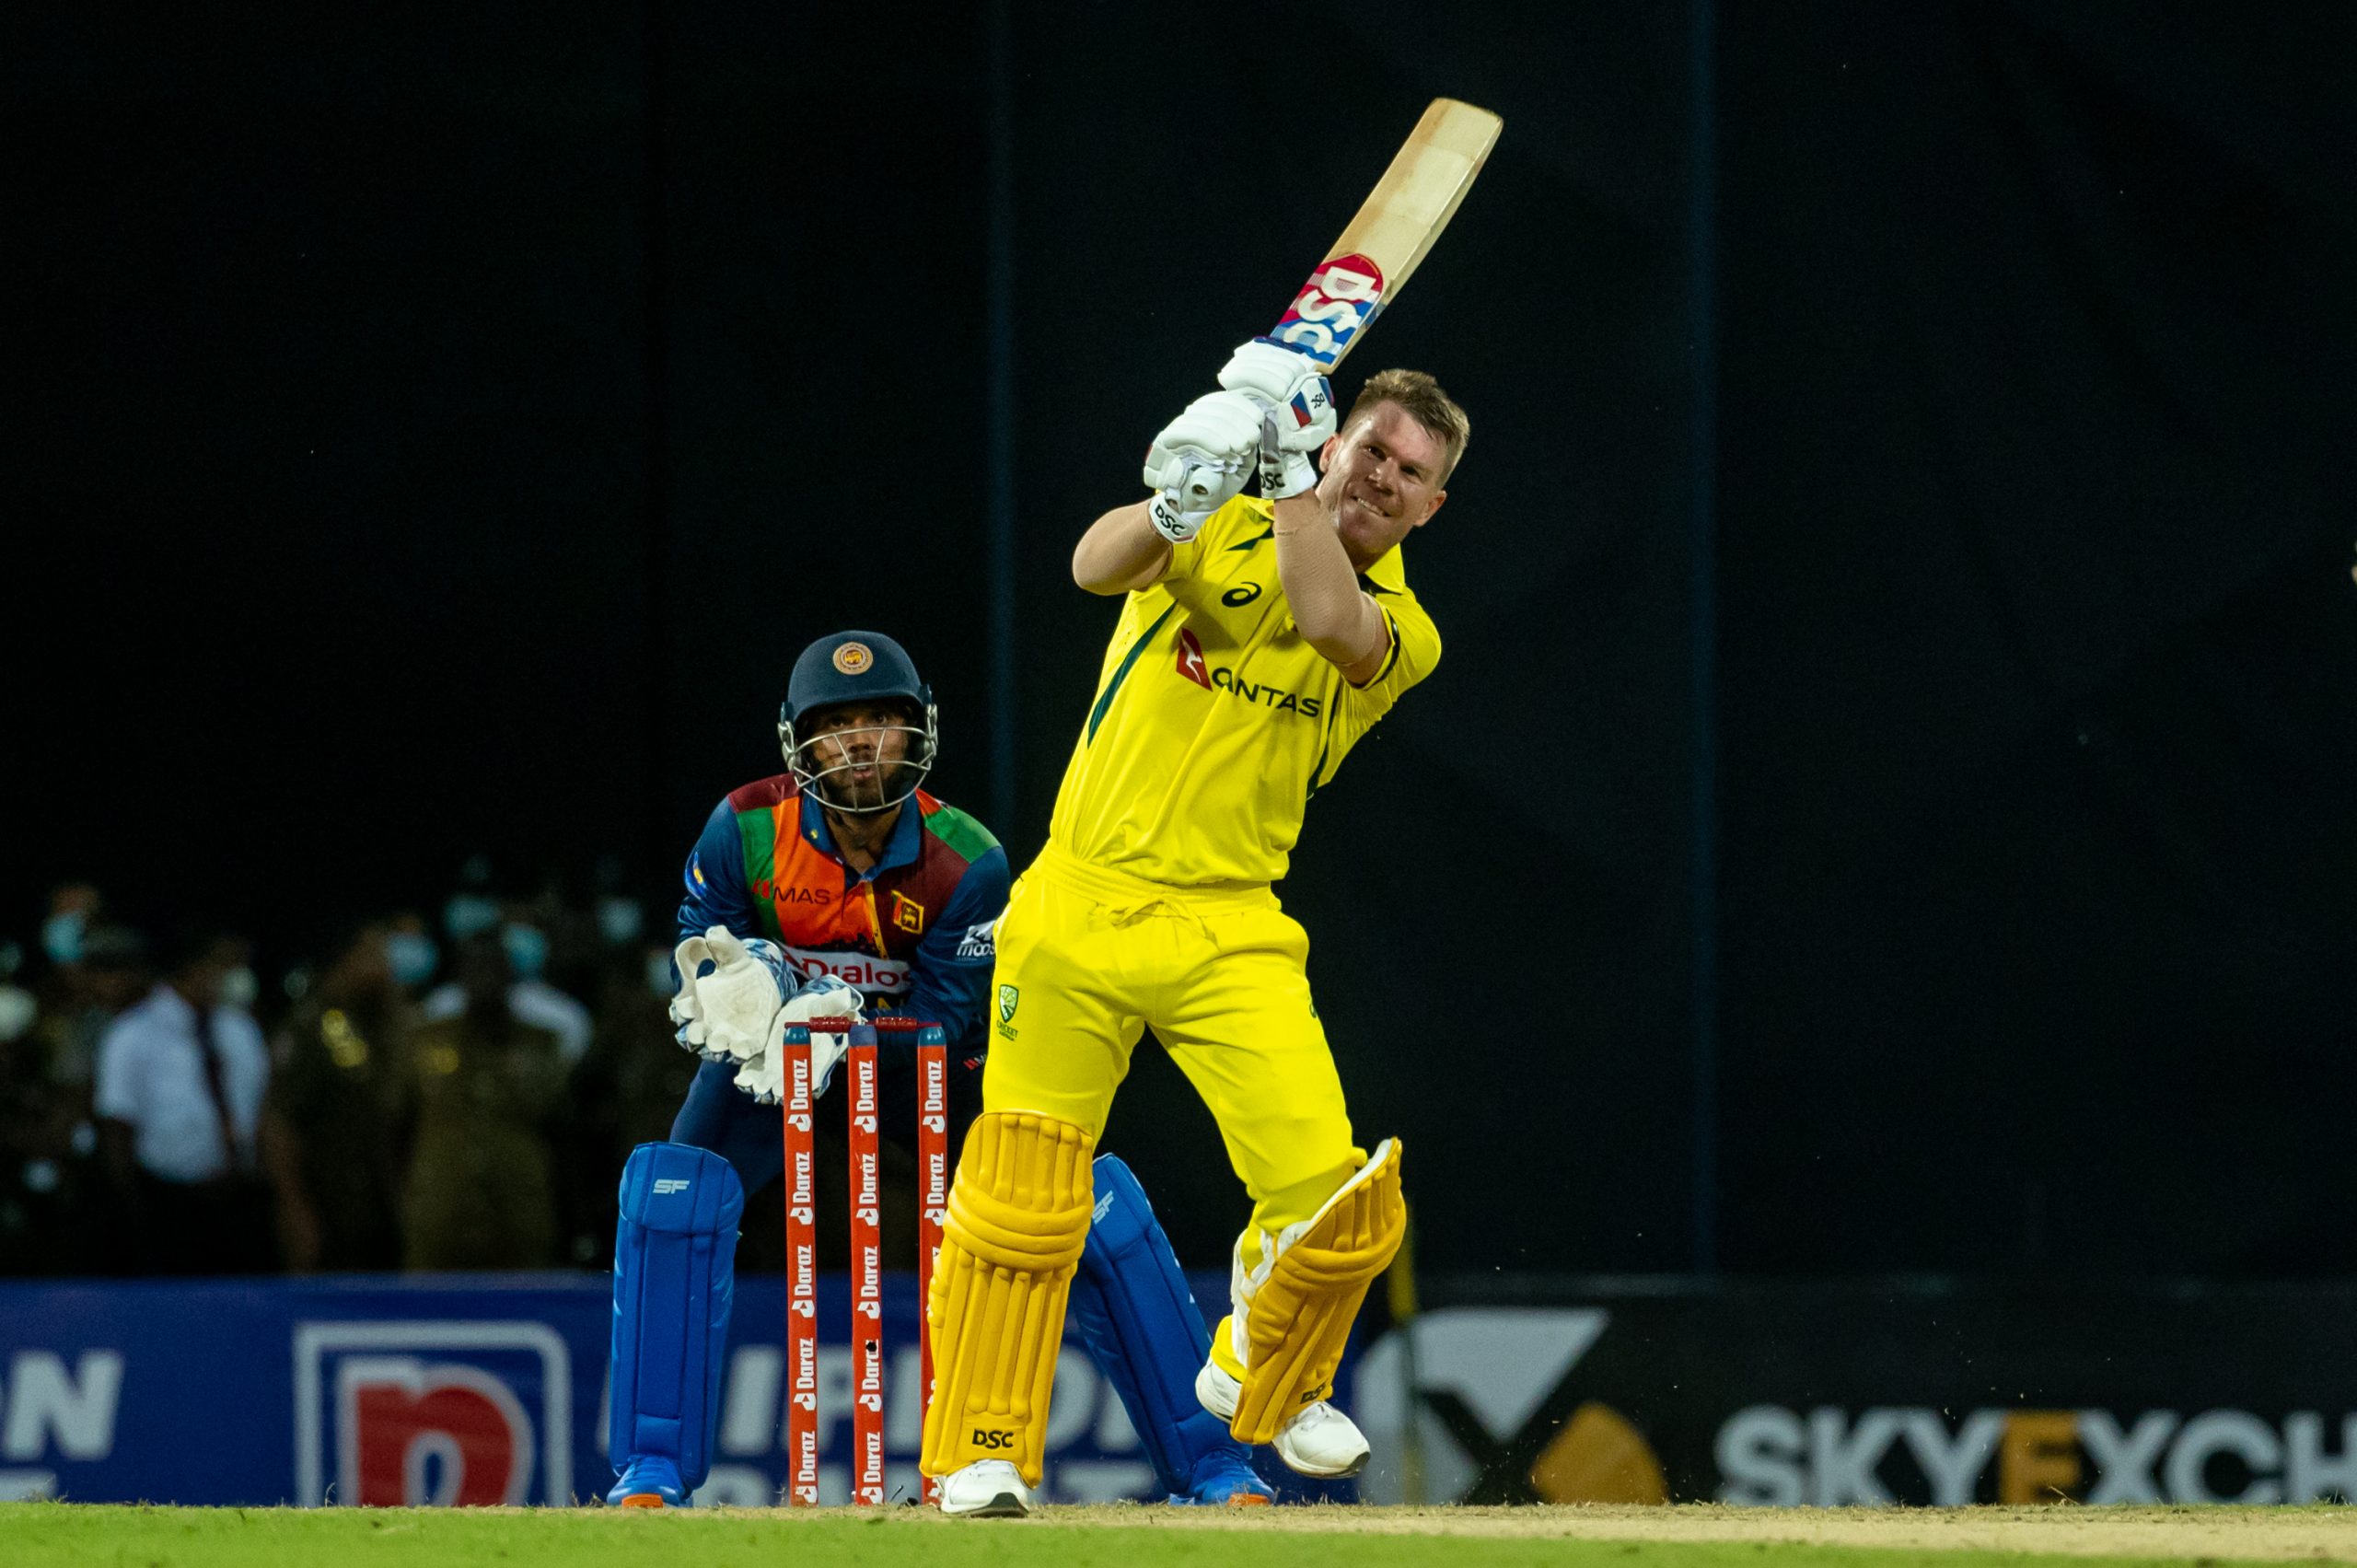 Australia in easy 10-wicket win over Sri Lanka after Hazlewood’s  4/16 